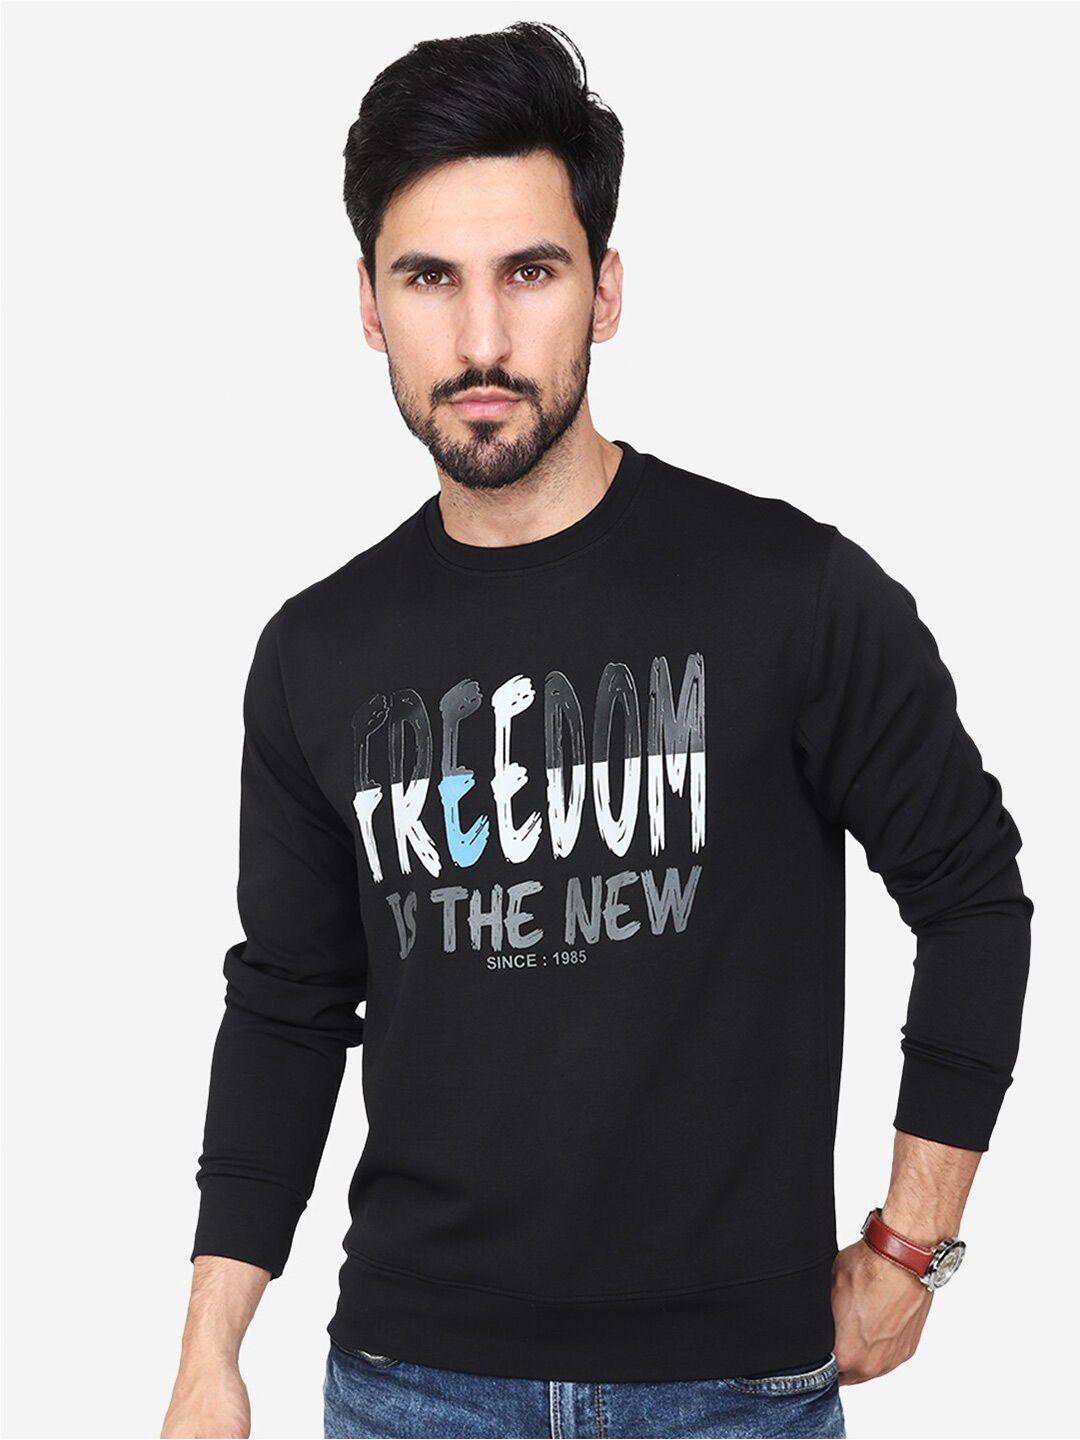 albion typography printed round neck pullover cotton sweatshirt